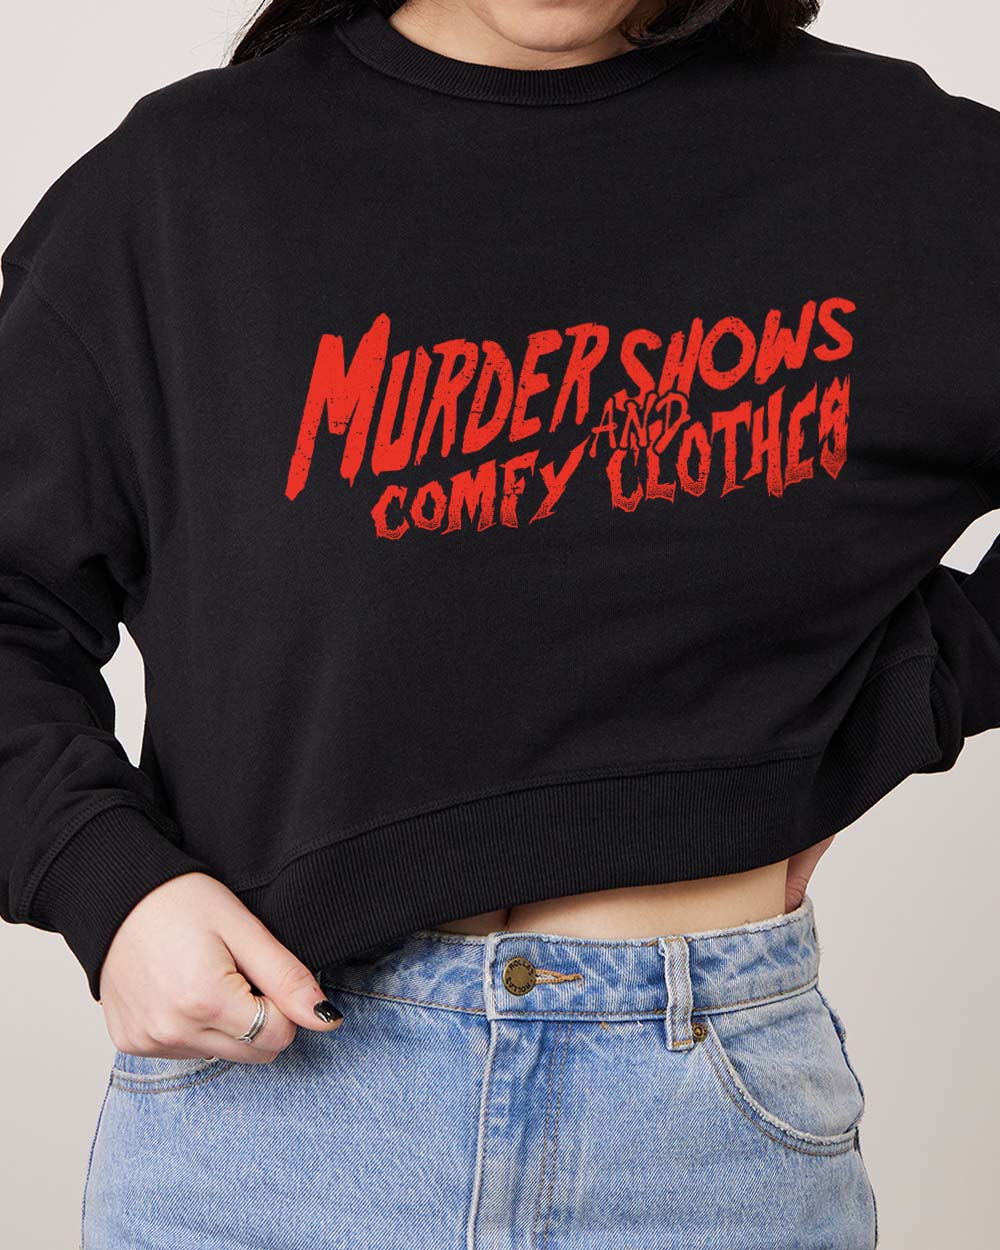 Murder Shows and Comfy Clothes Crop Jumper Australia Online Black